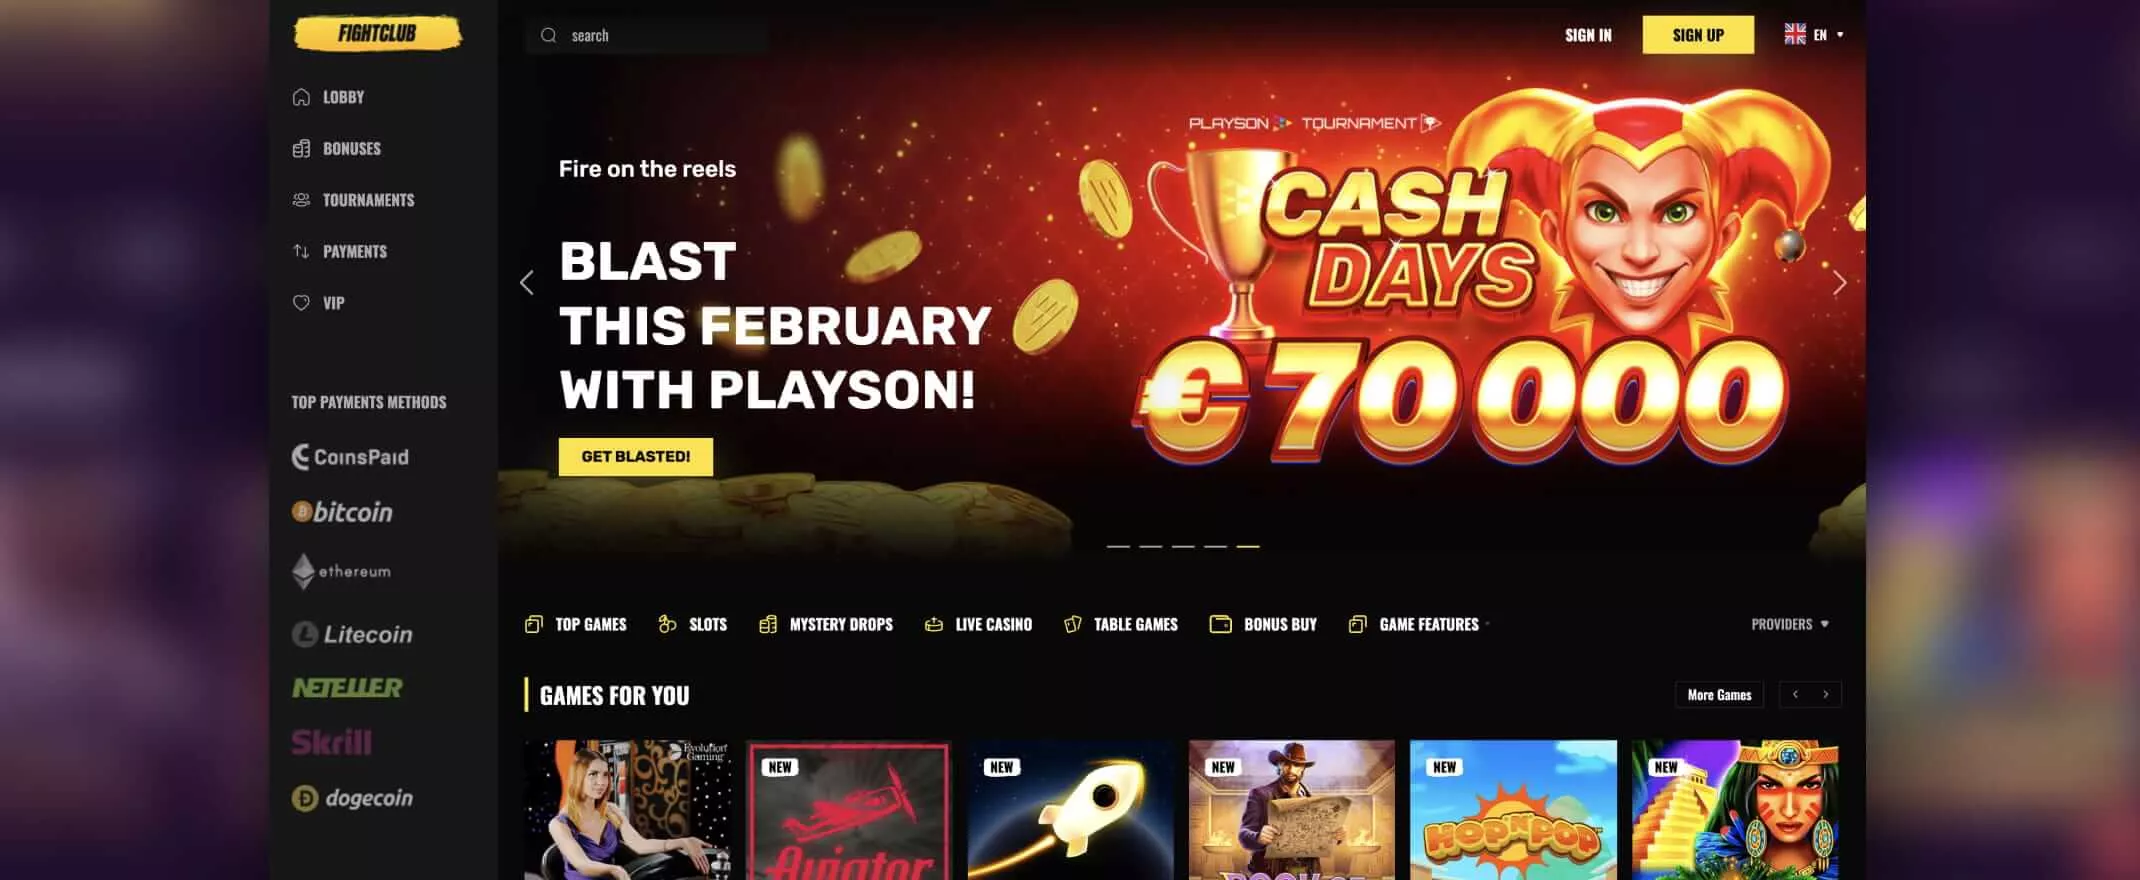 Fight Club Casino screenshot of the homepage